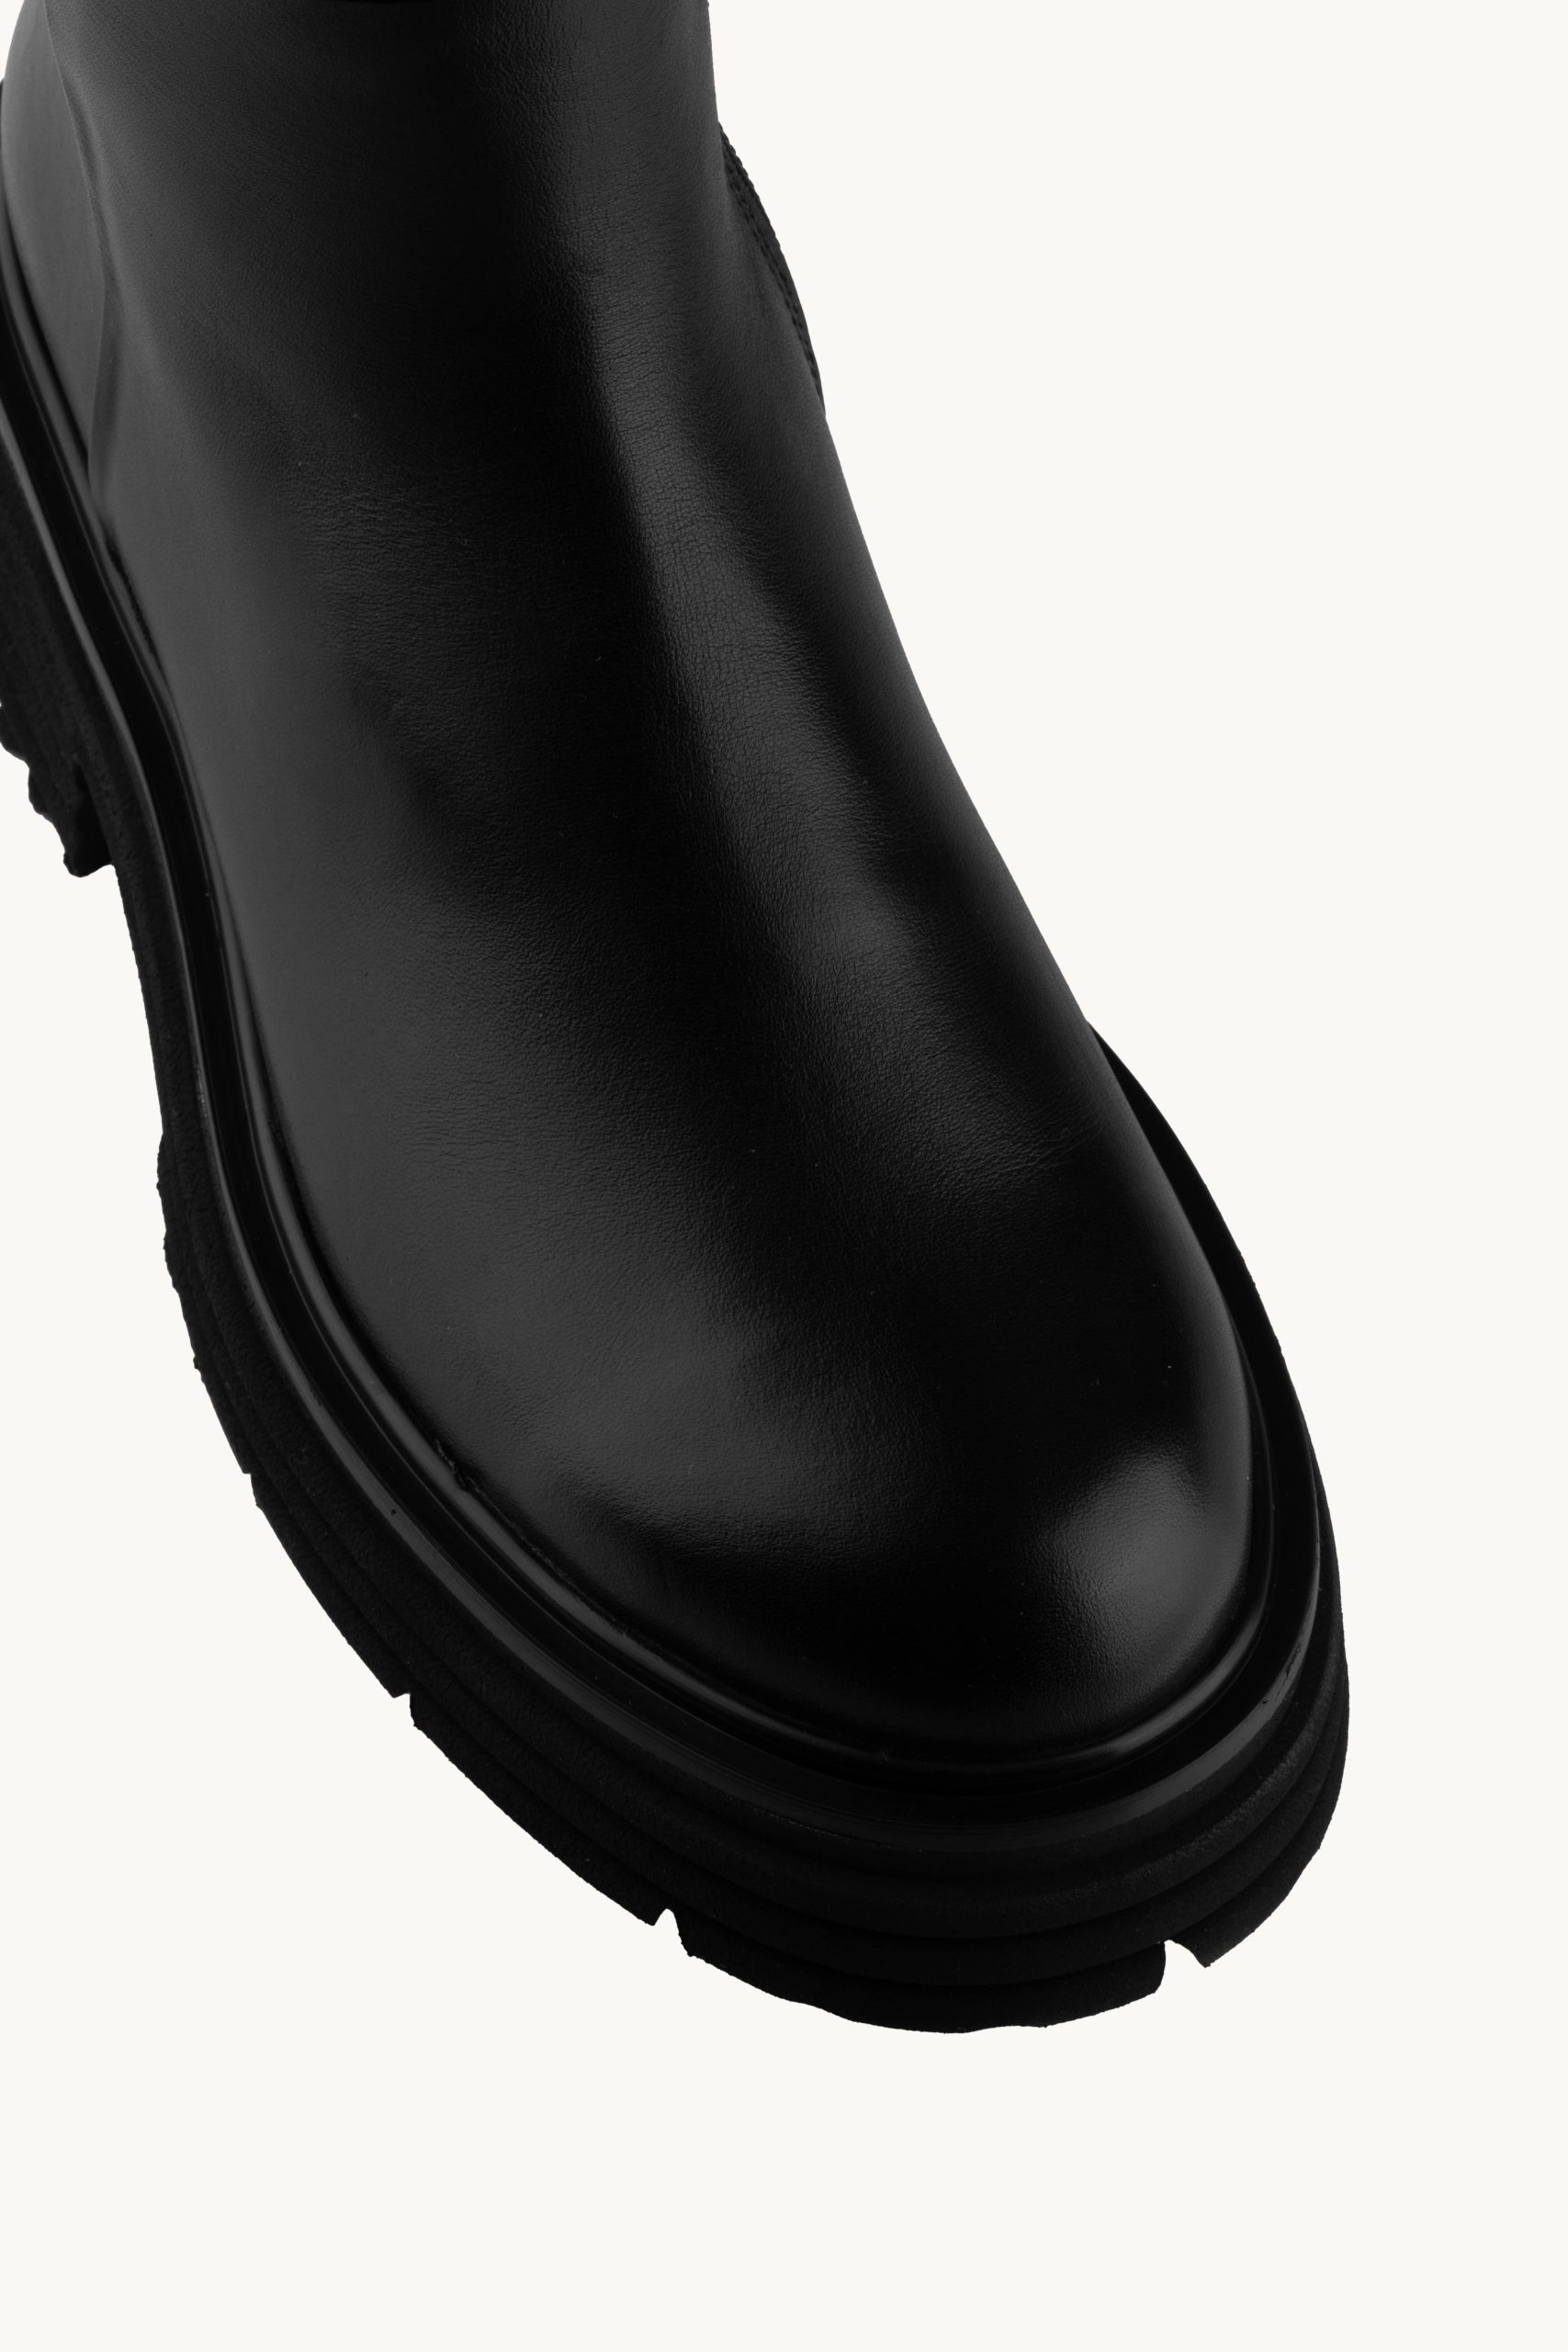 Duge čizme - Midnight Walkabout - duboke čizme zaobljenog vrha sa gumenim rebrastim đonom.